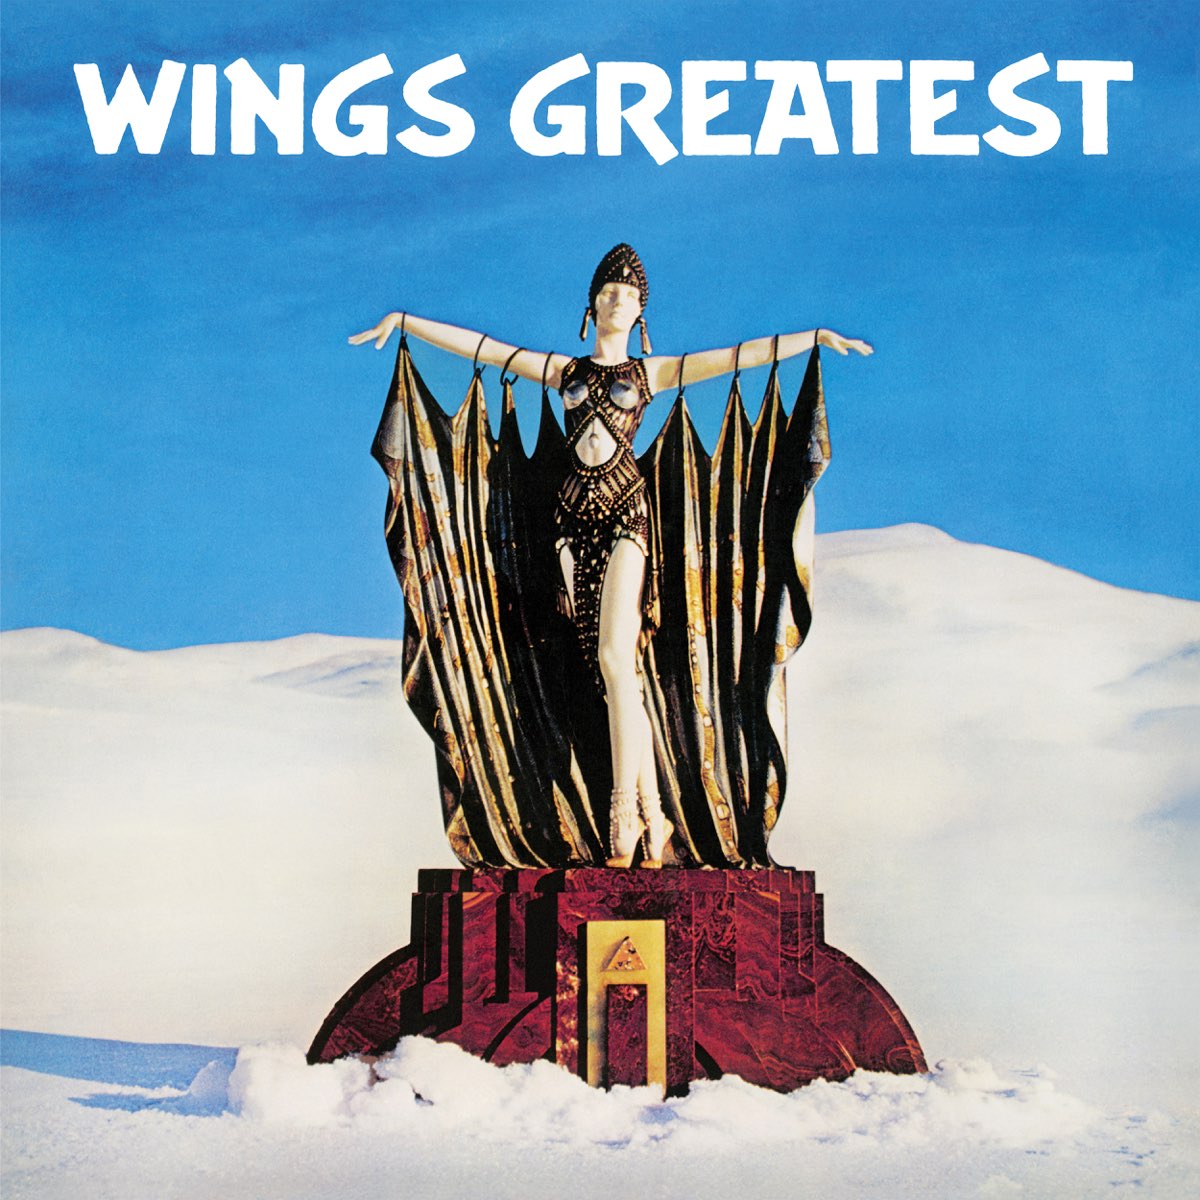 ‎Wings Greatest - Album by Wings - Apple Music